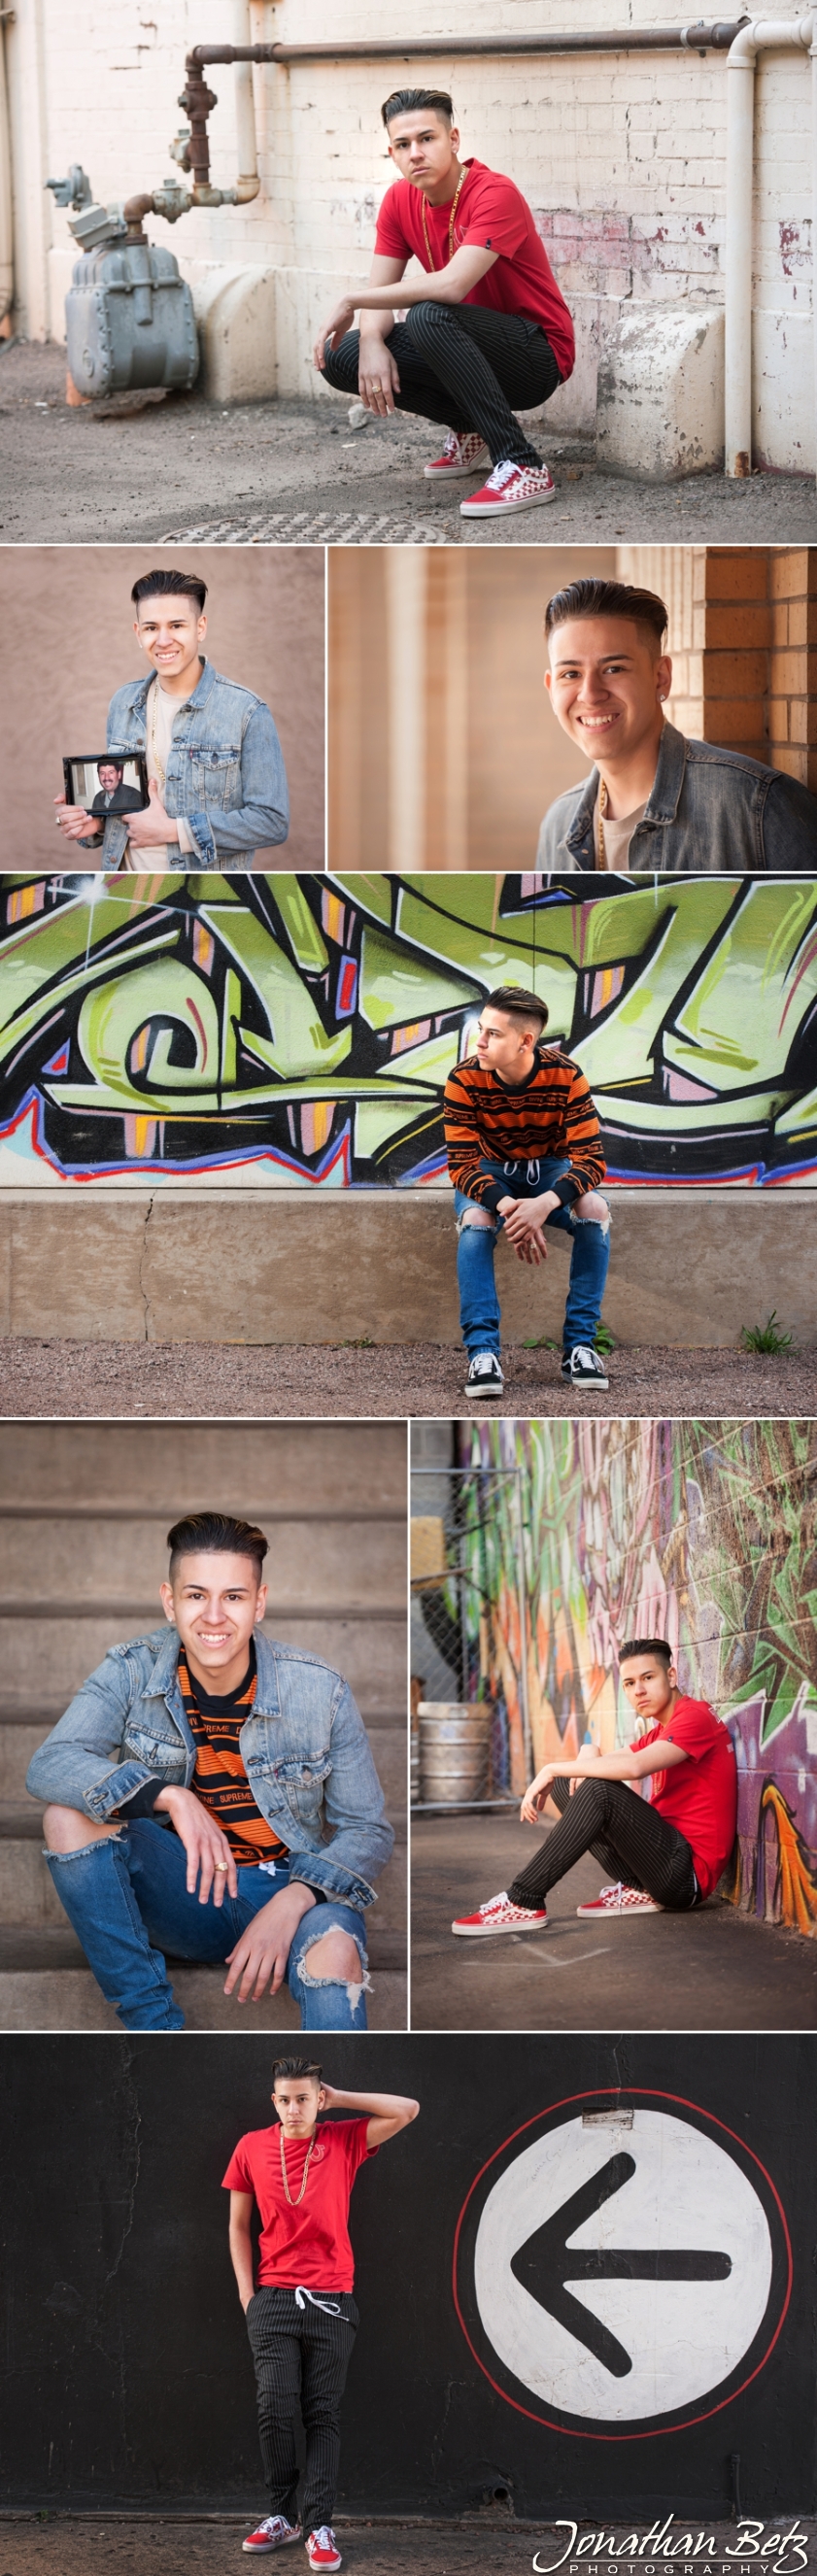 Colorado Springs High School Senior Portraits Jonathan Betz Photography 1